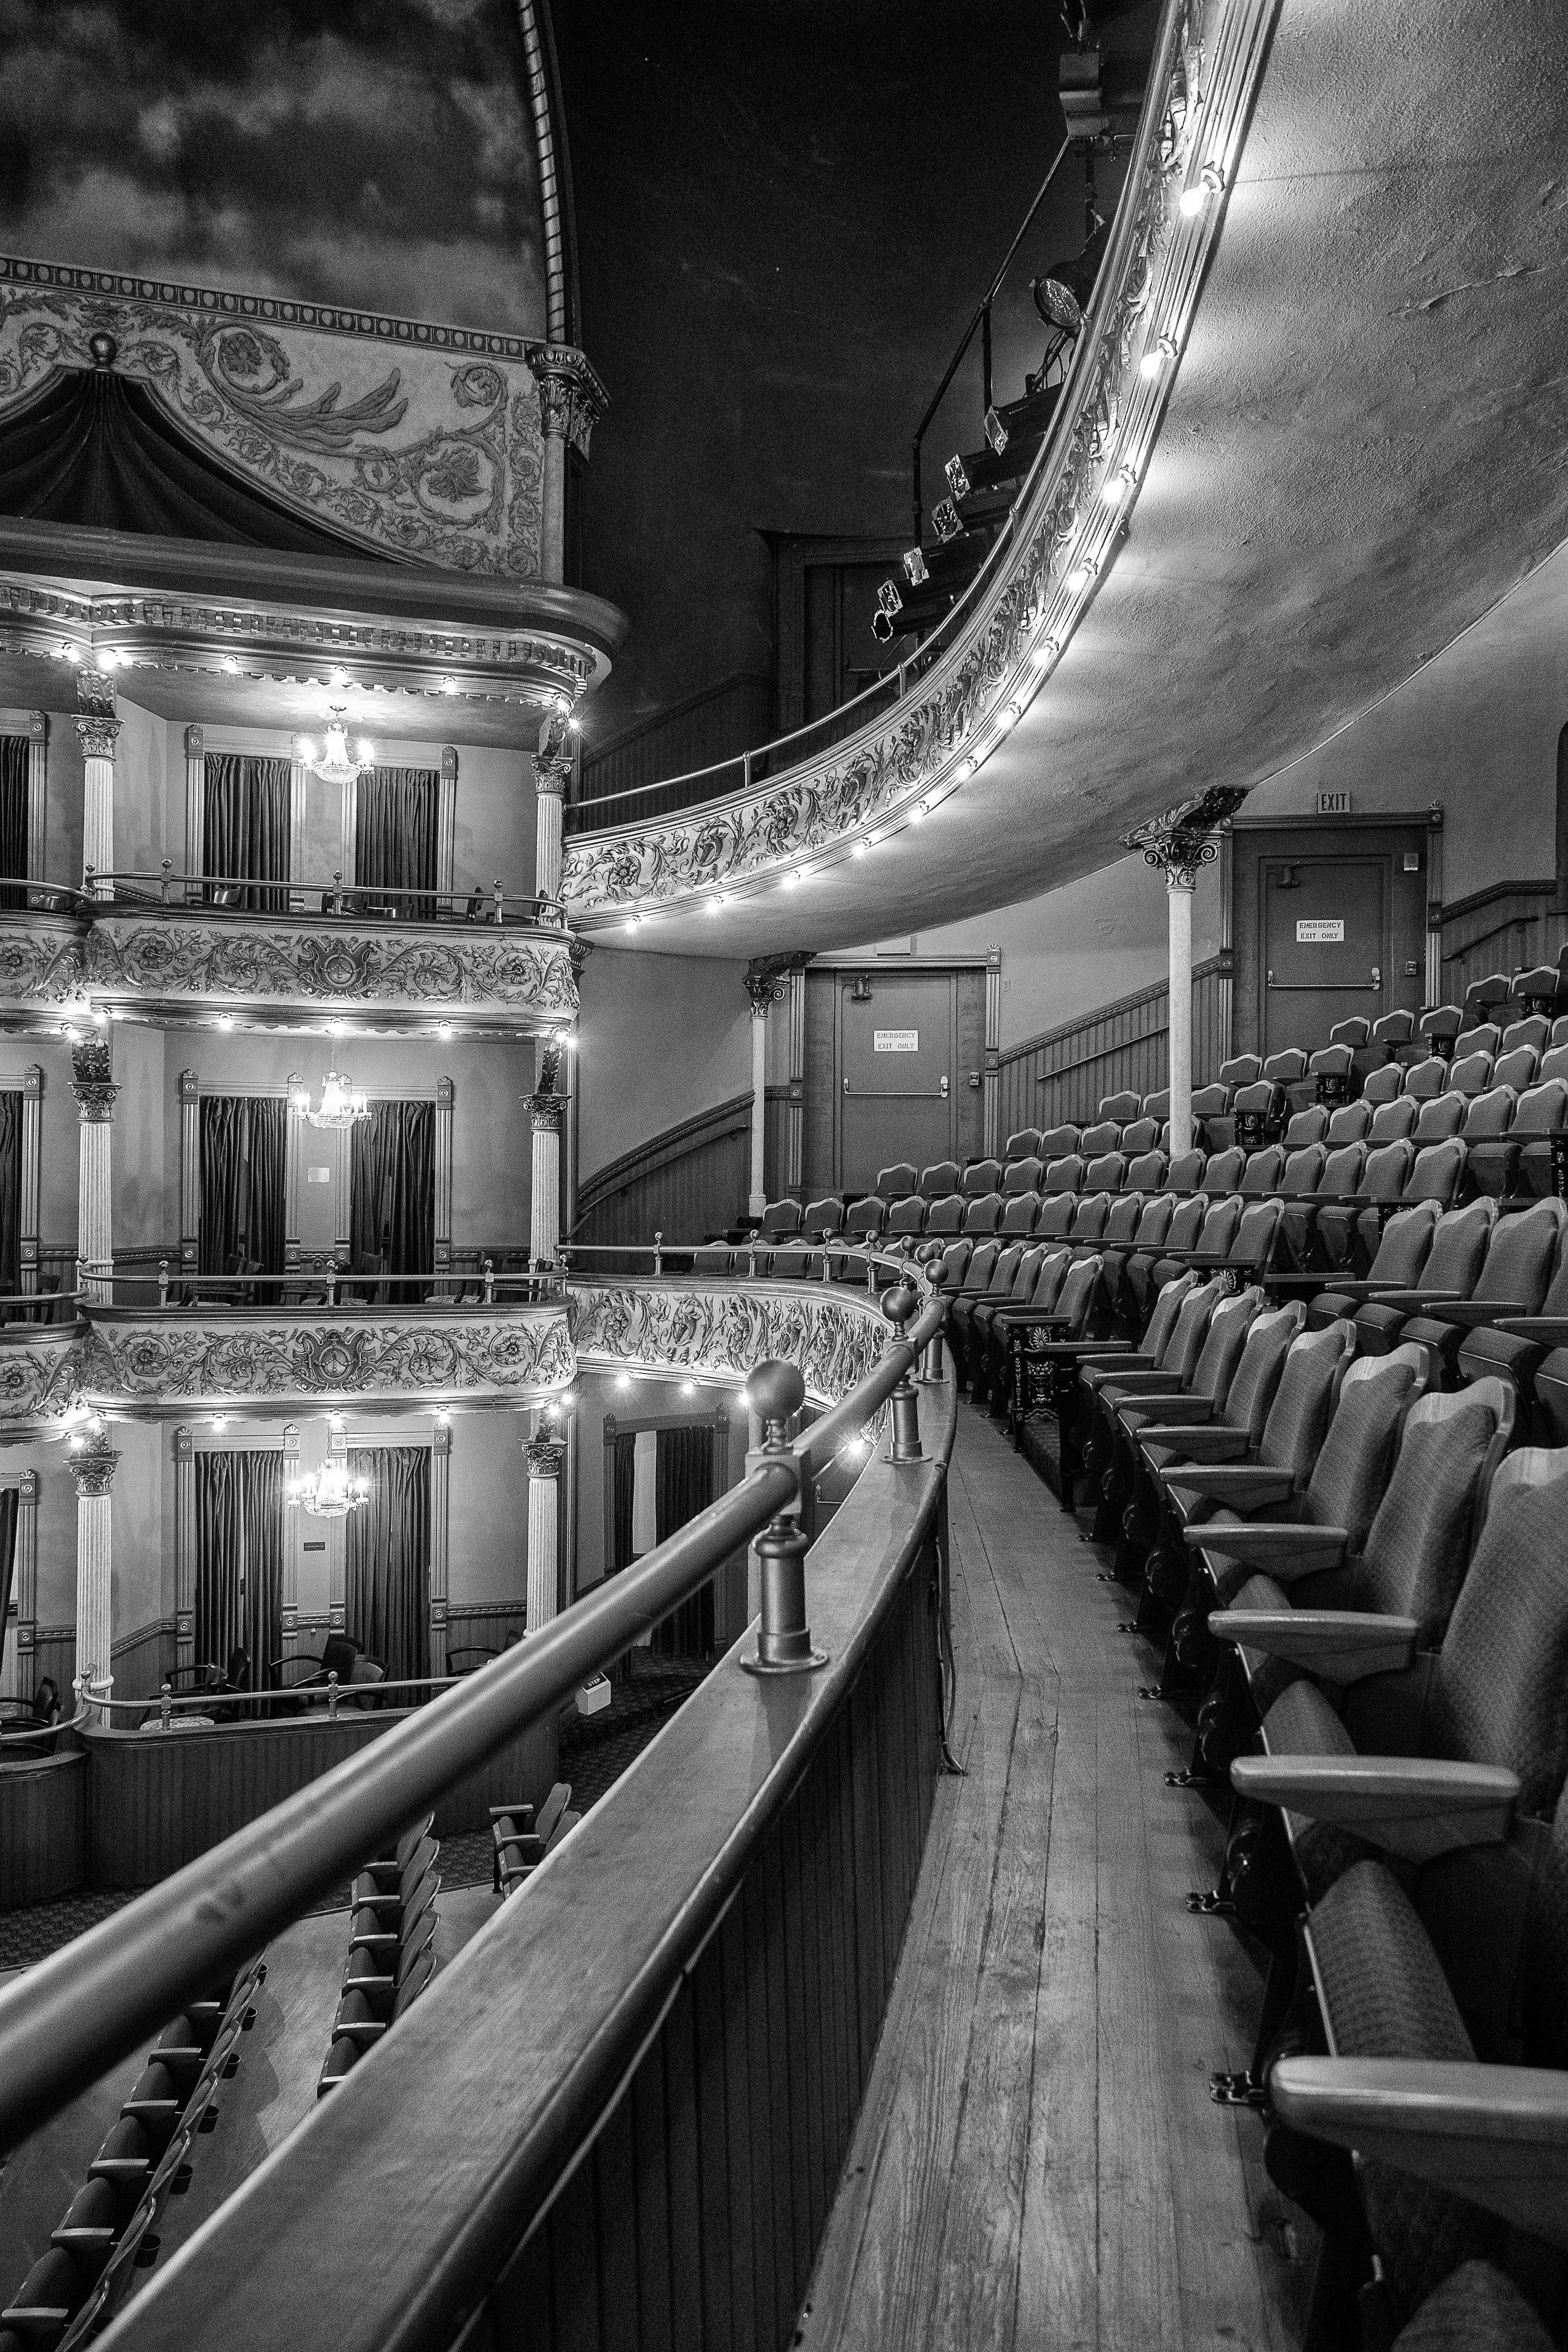 Myrtie Cope Black and White Photograph - "Grand Opera House - Balcony & Box Seats" - architectural photo - Ezra Stoller